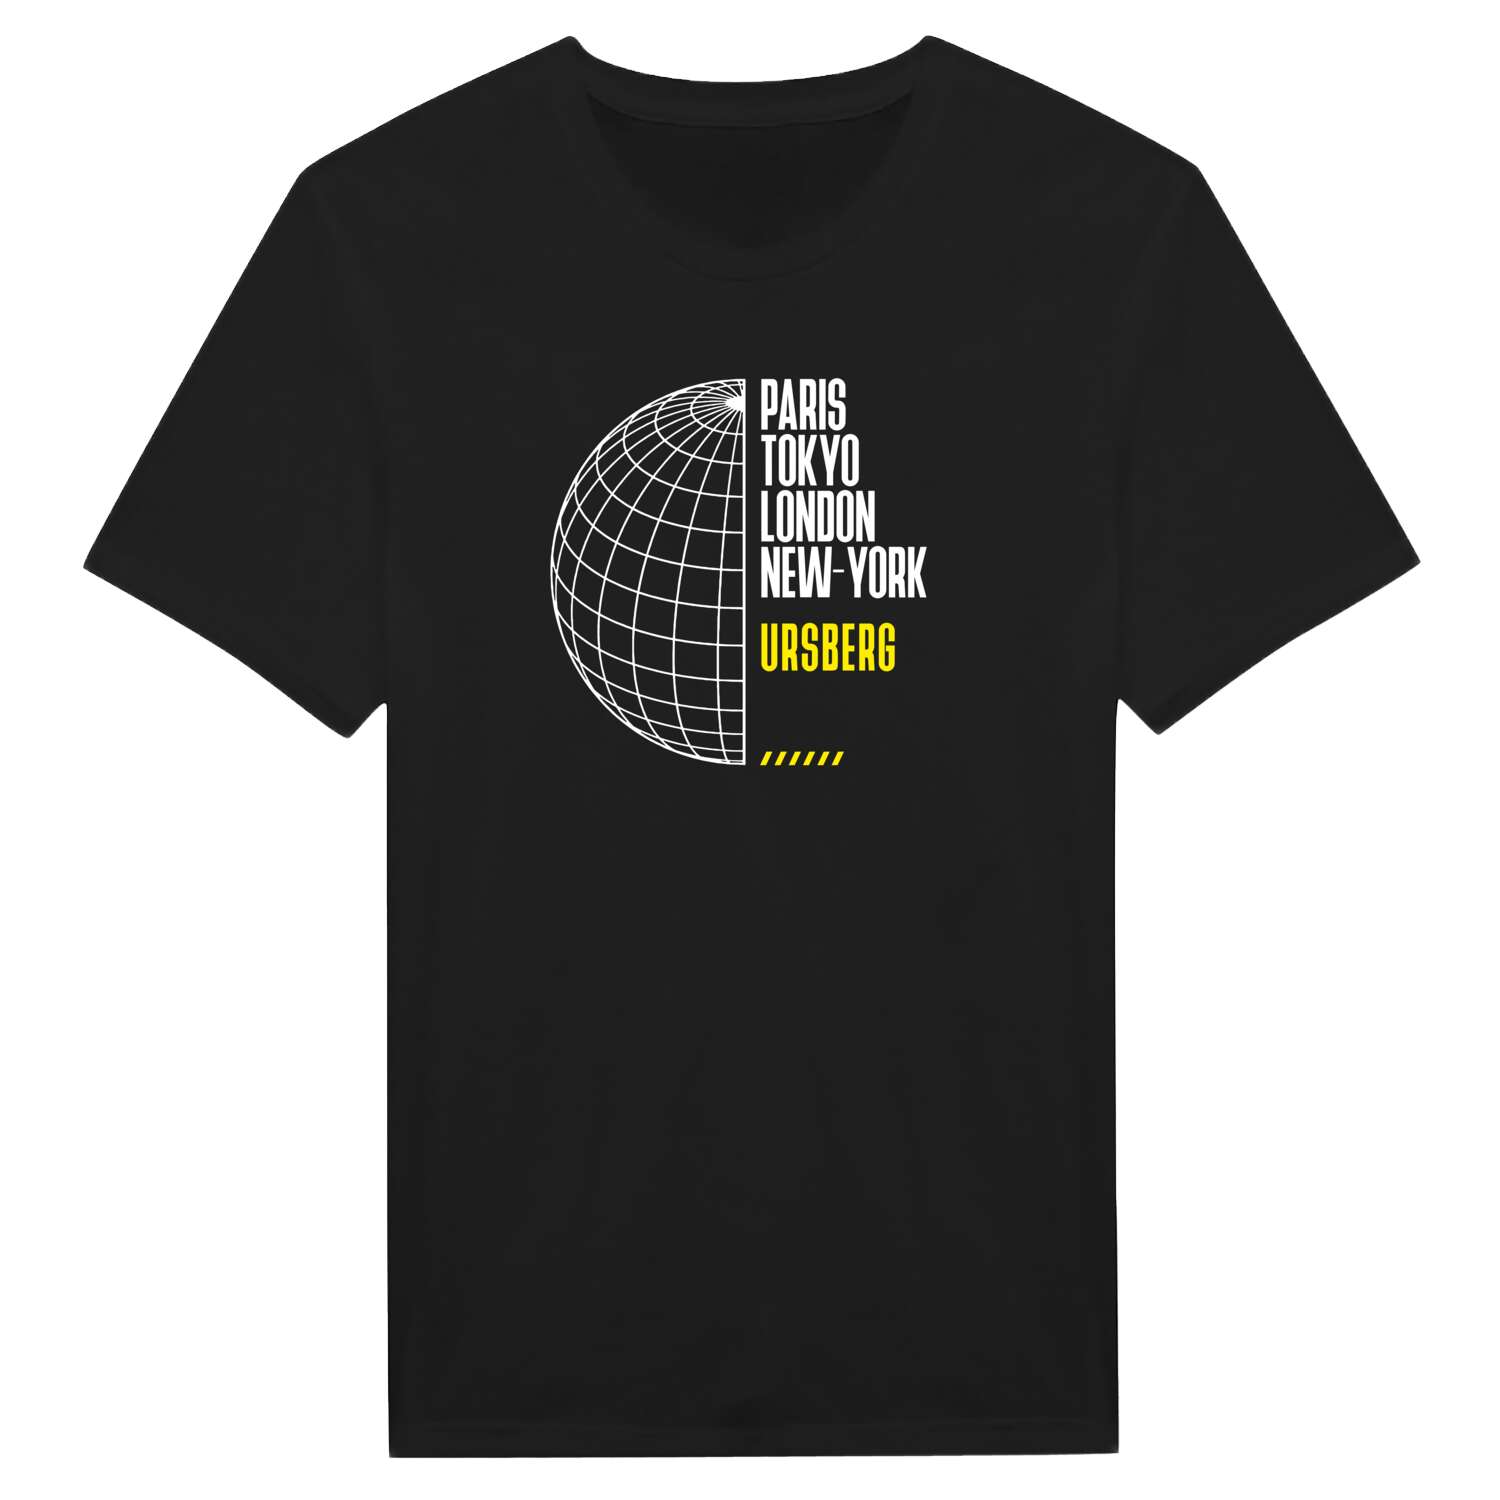 Ursberg T-Shirt »Paris Tokyo London«